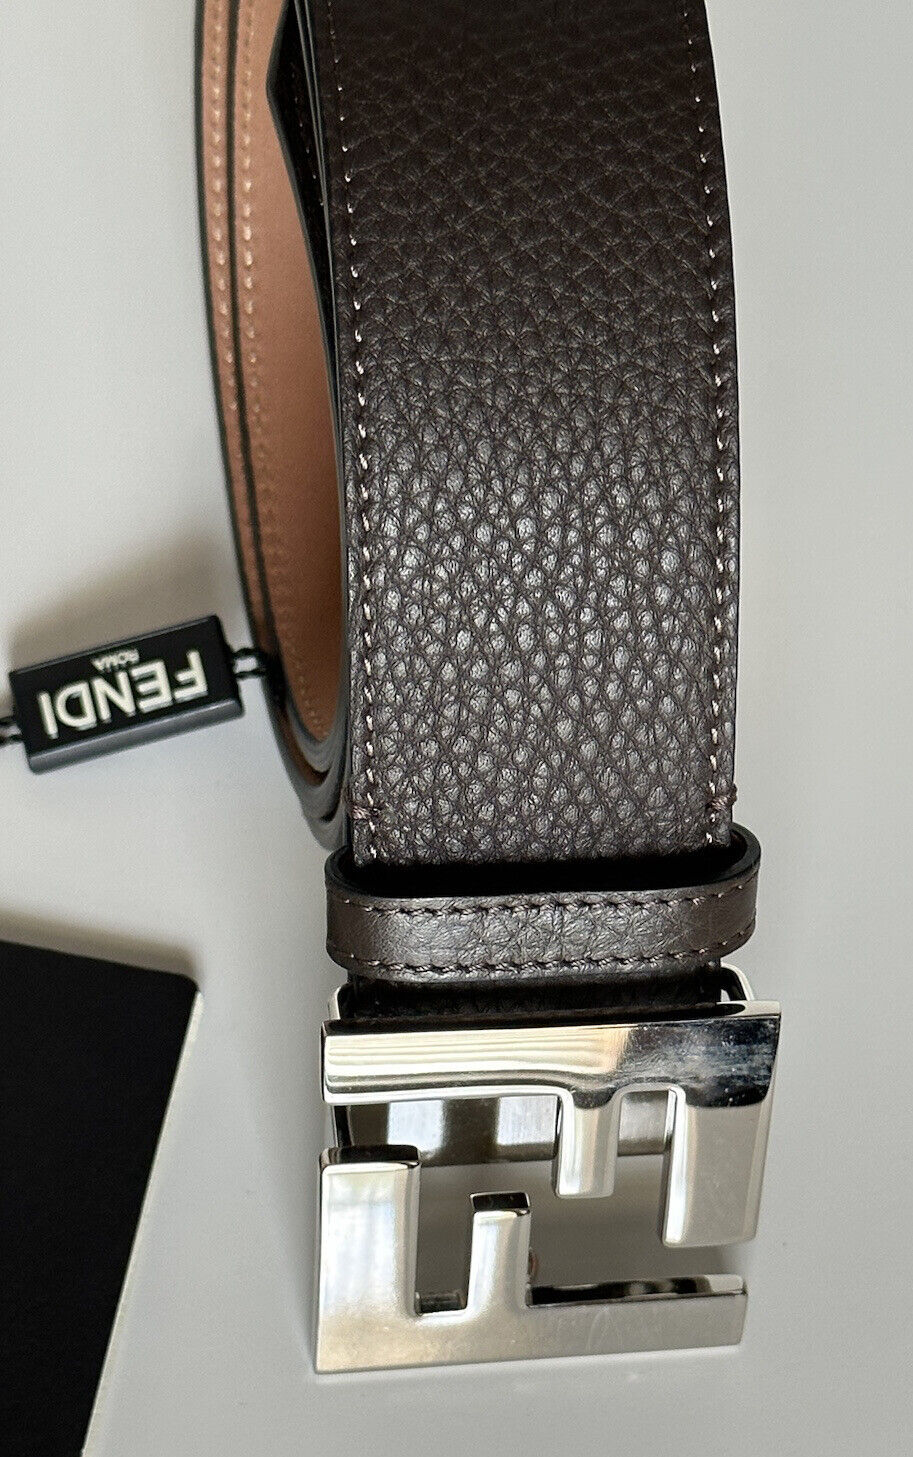 NWT $550 Fendi FF Calf Leather Brown Belt 110/44 Italy 7C0403